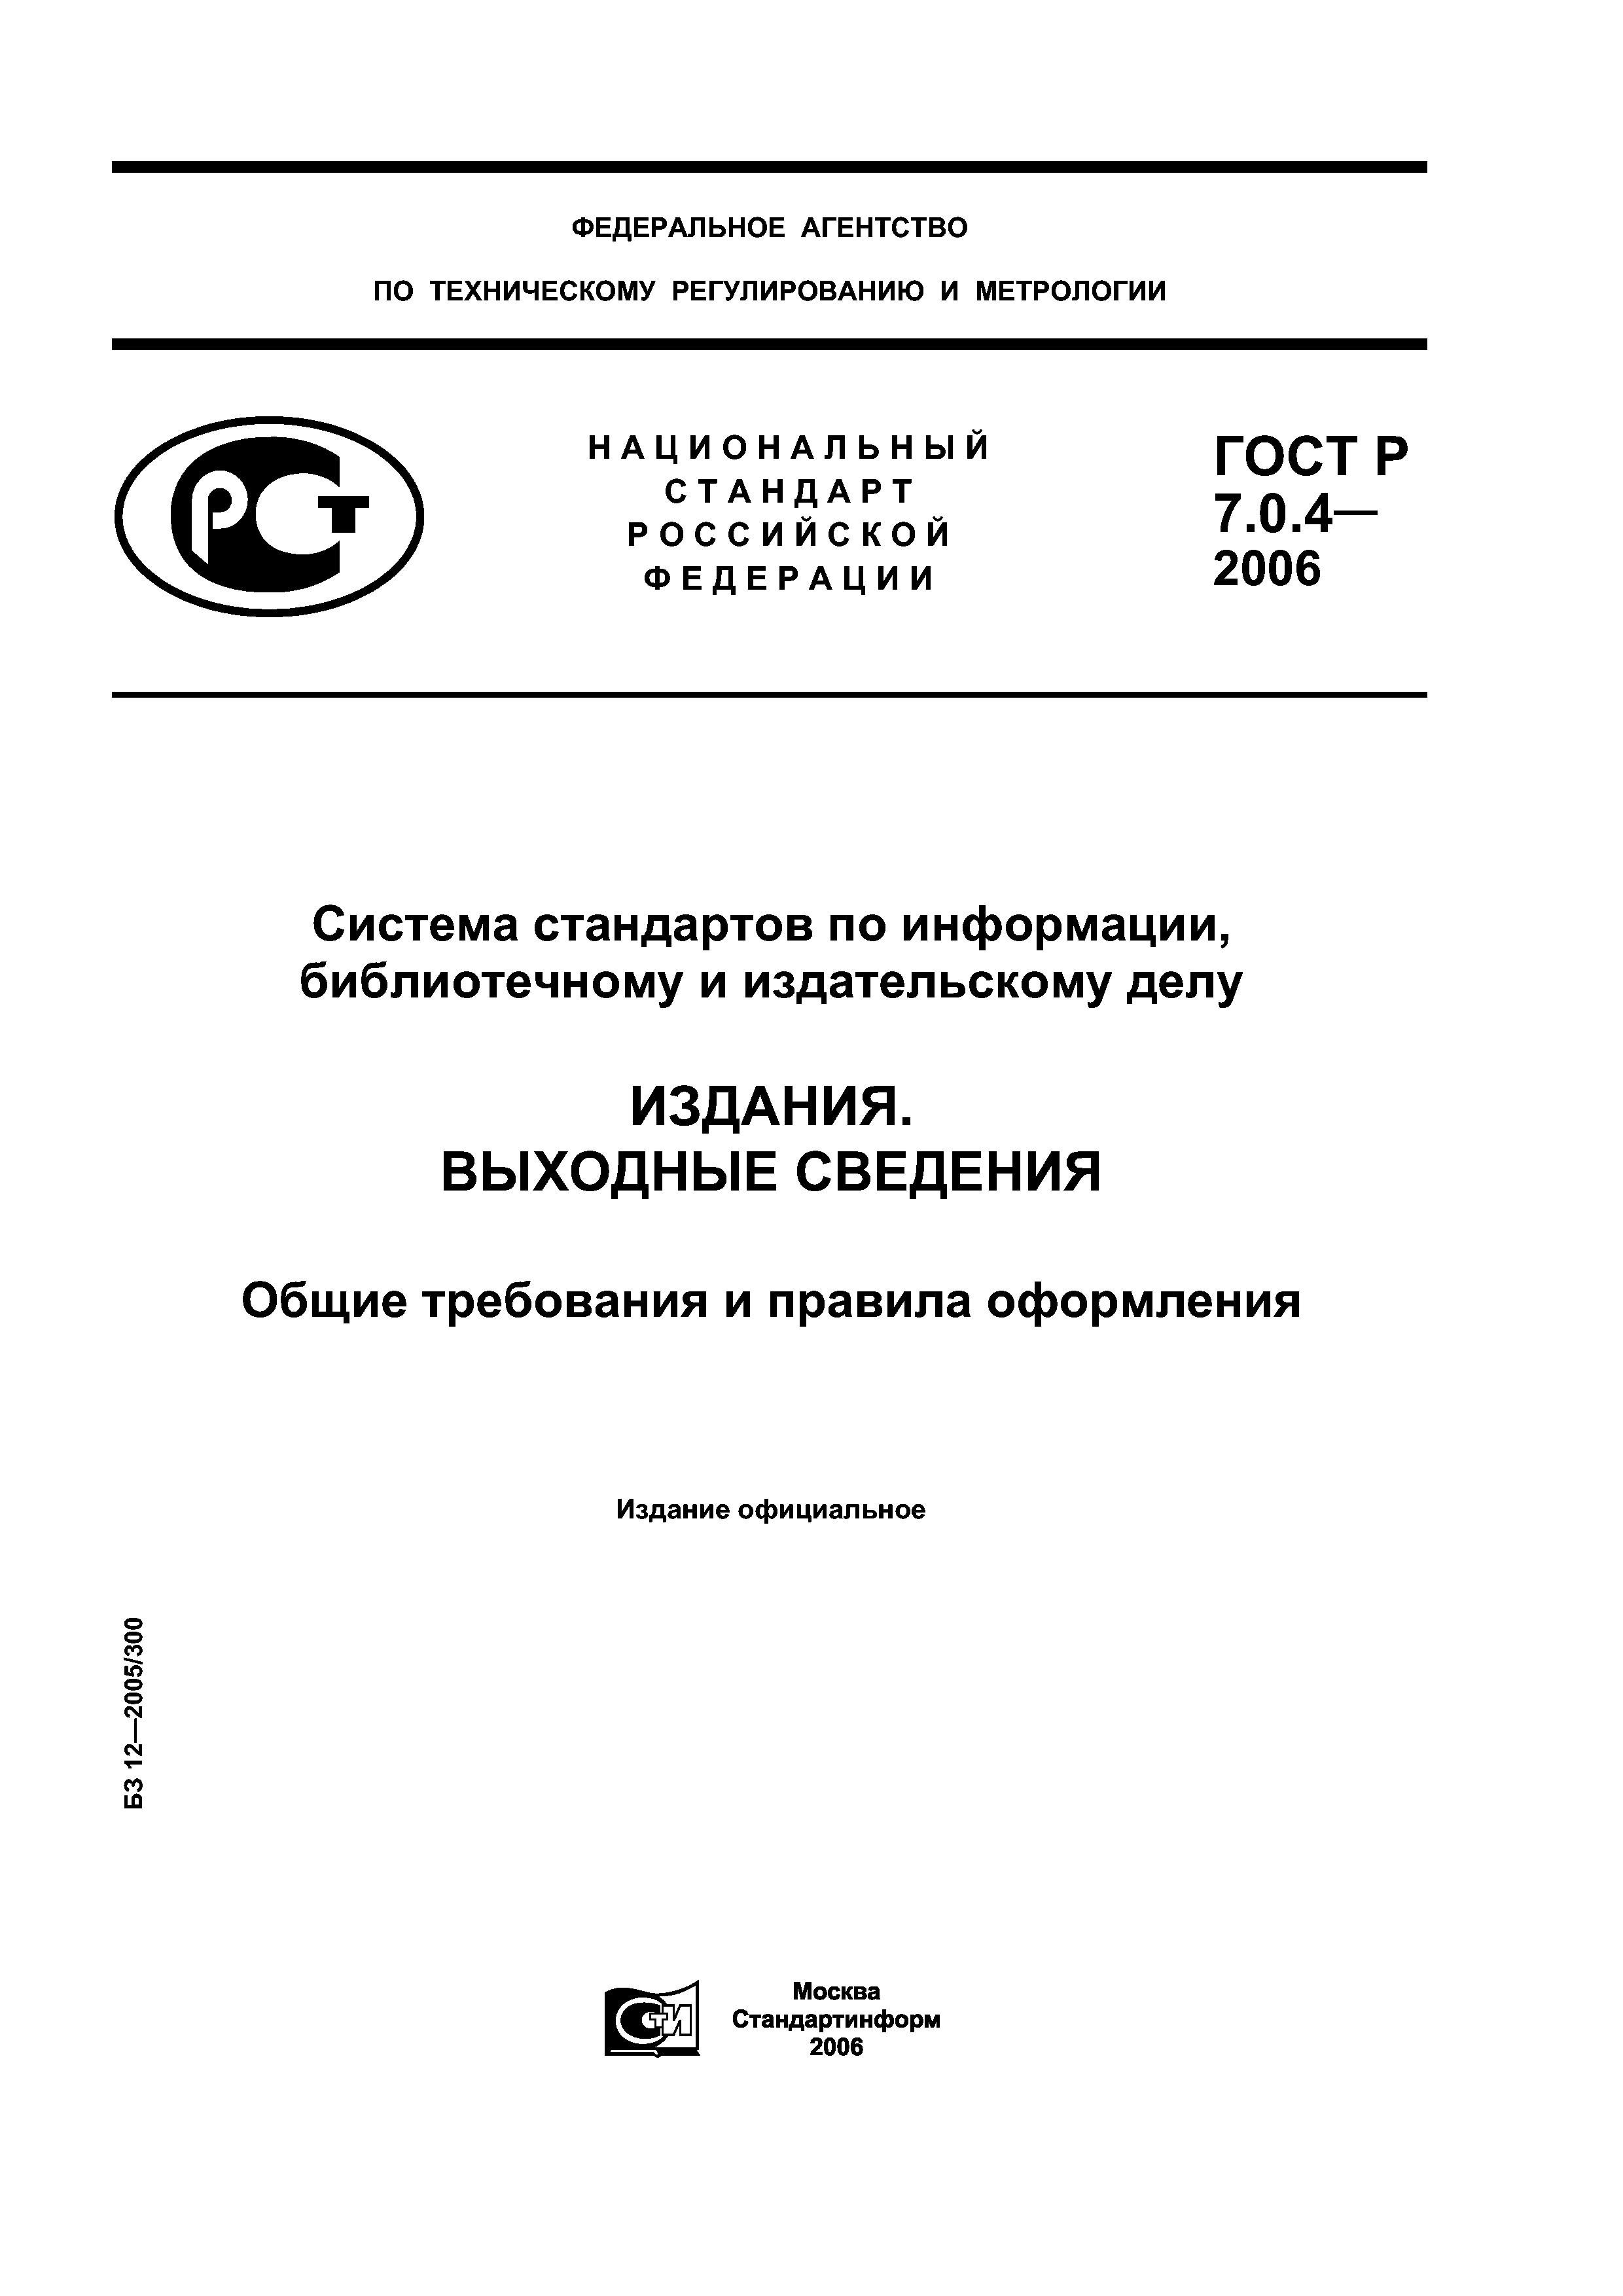 ГОСТ Р 7.0.4-2006